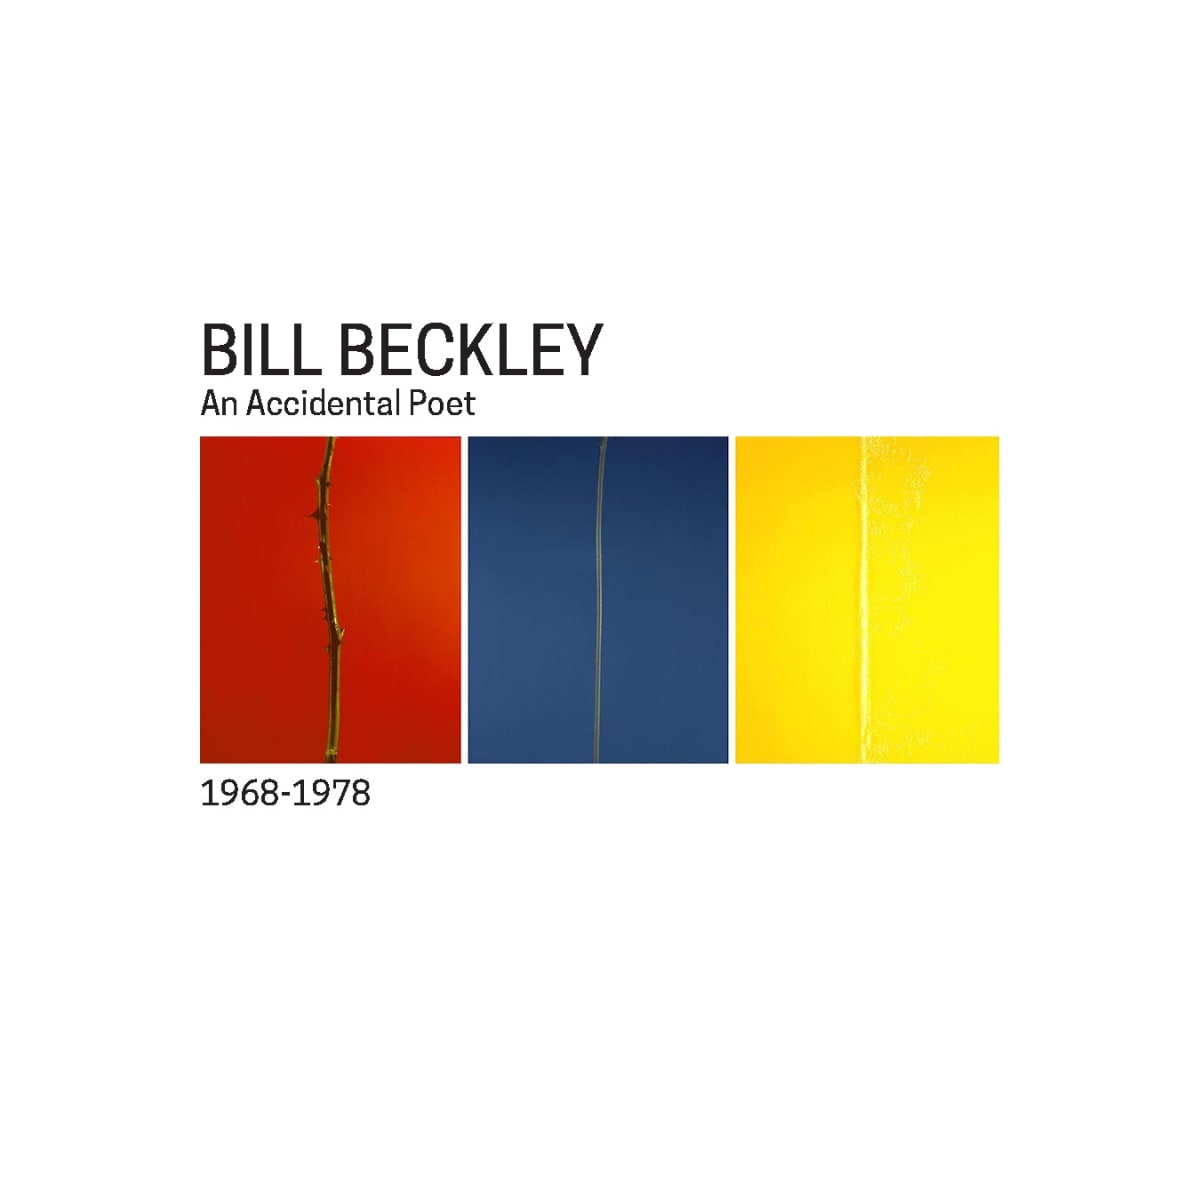 Bill Beckley: An Accidental Poet